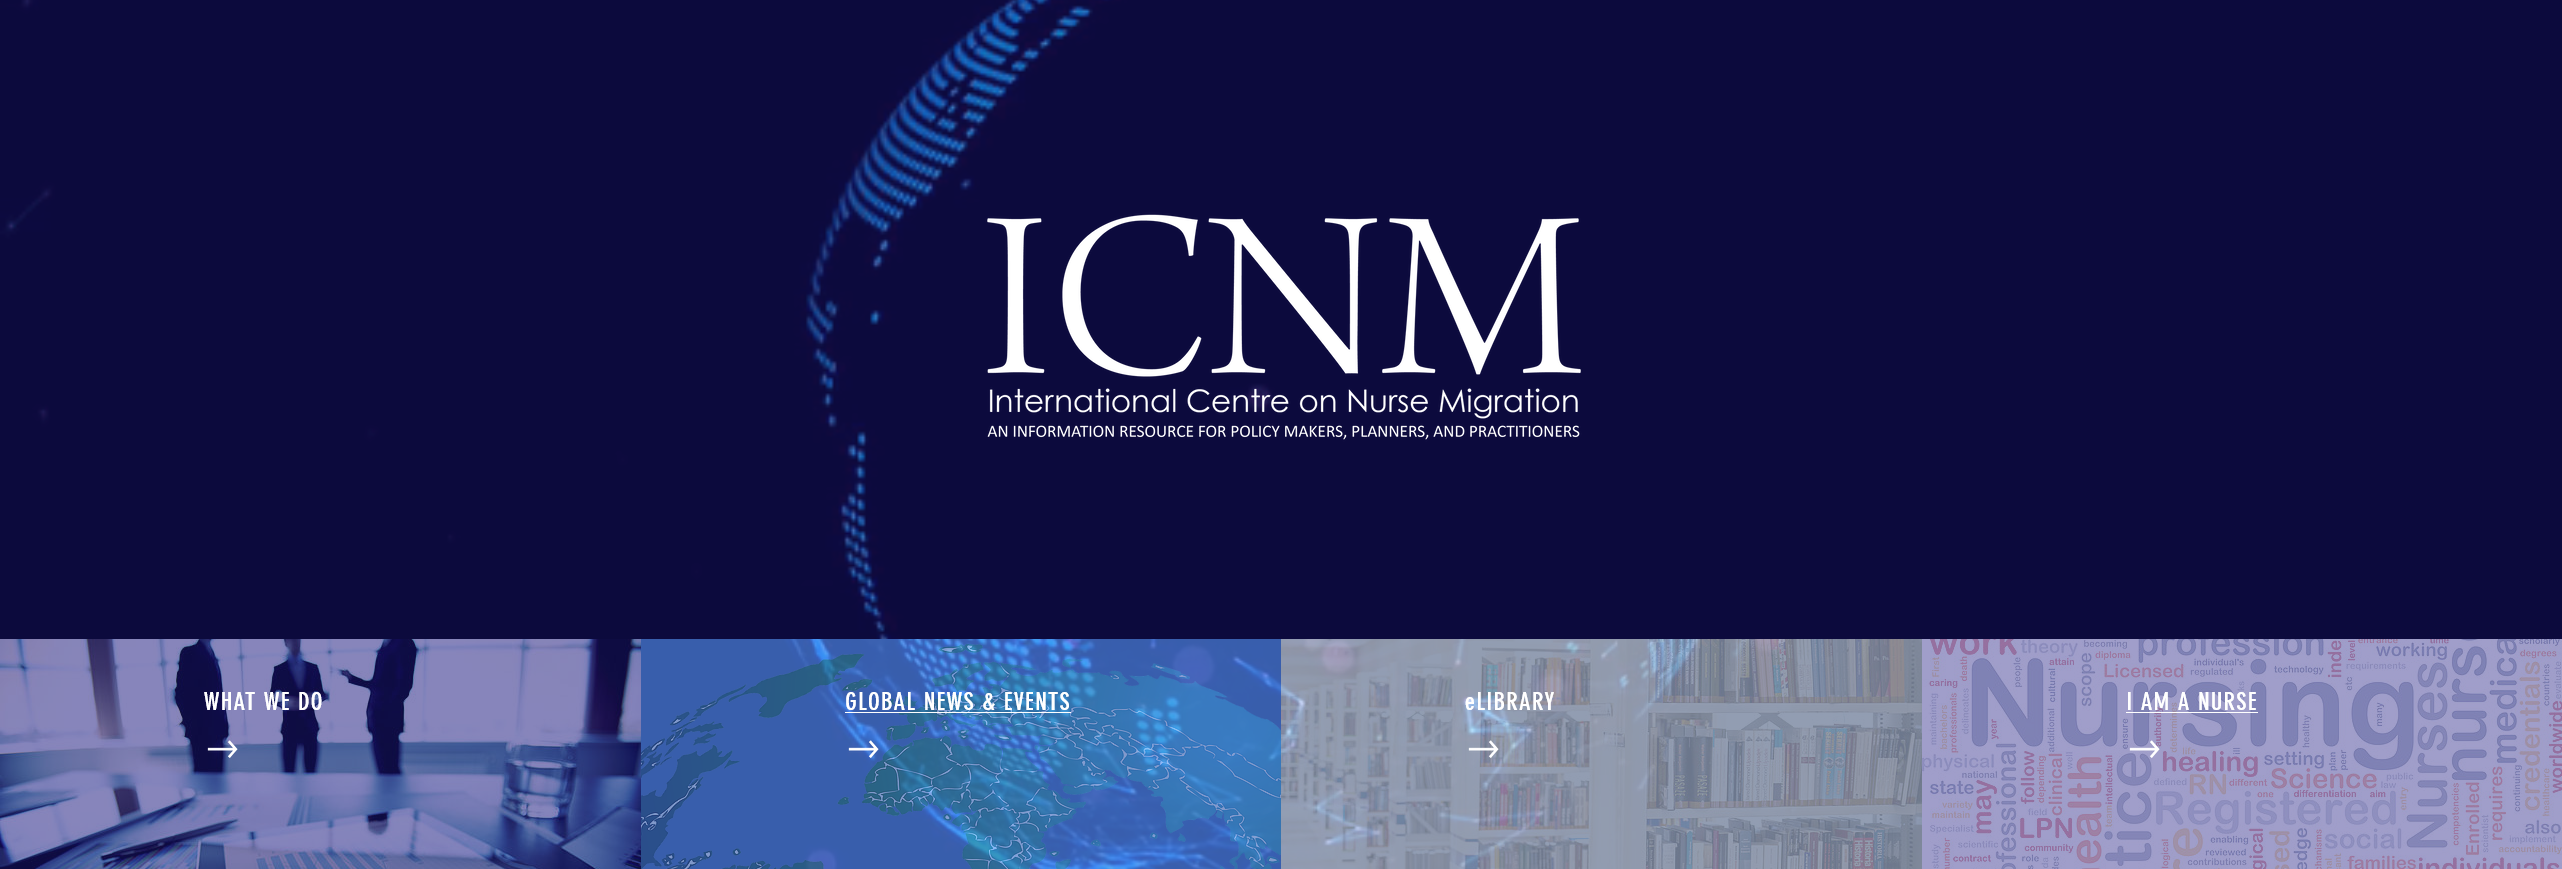 ICNM website